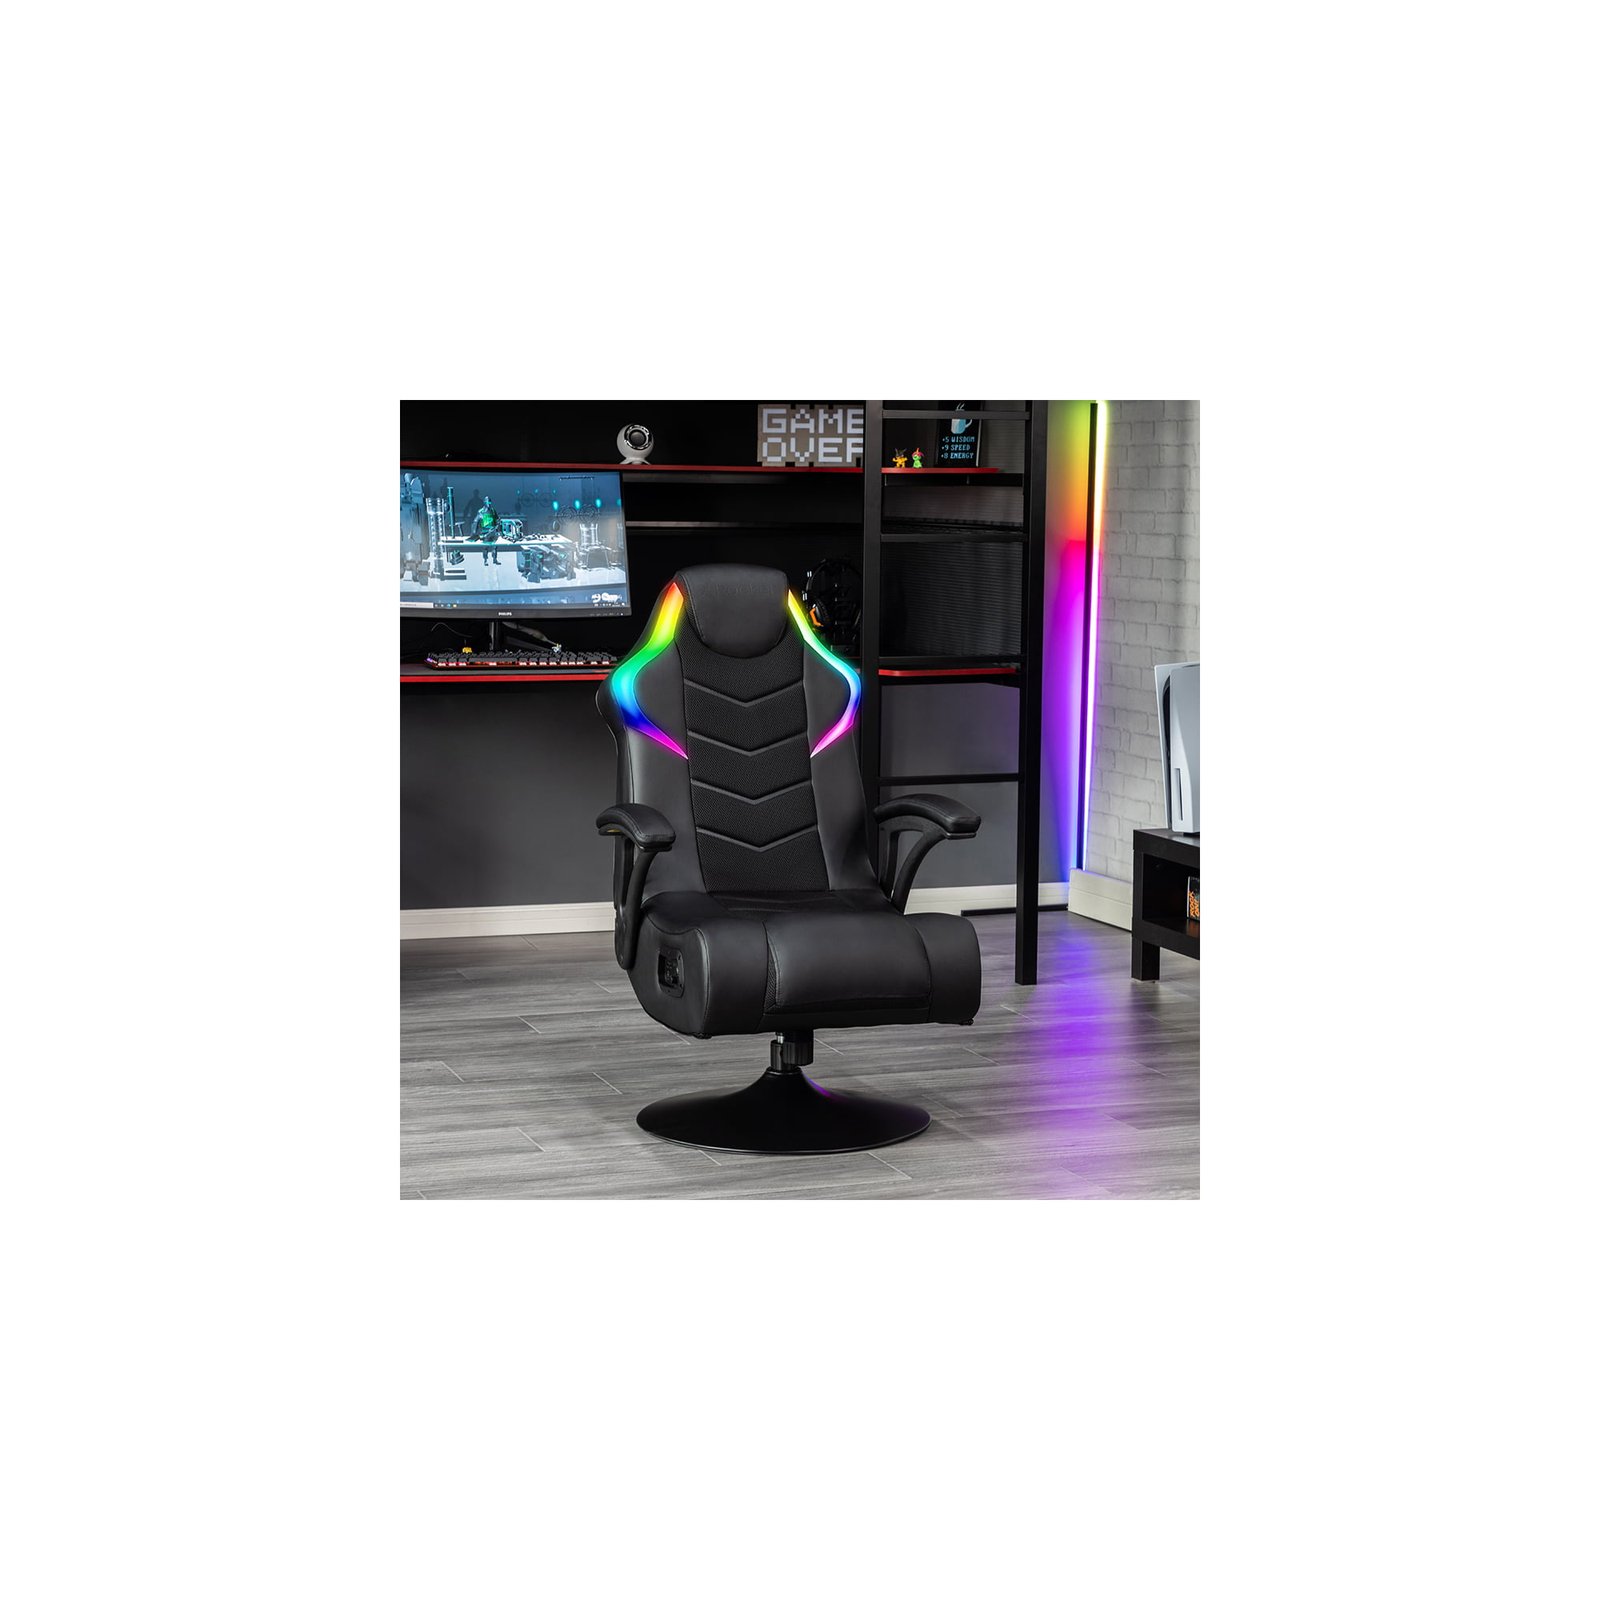 Sprællemand snyde Øst Timor X Rocker Nemesis RGB Audio Pedestal Console Chair, Black,  32.7″x25.8″x40.2″, Gaming Chair – The Market Depot